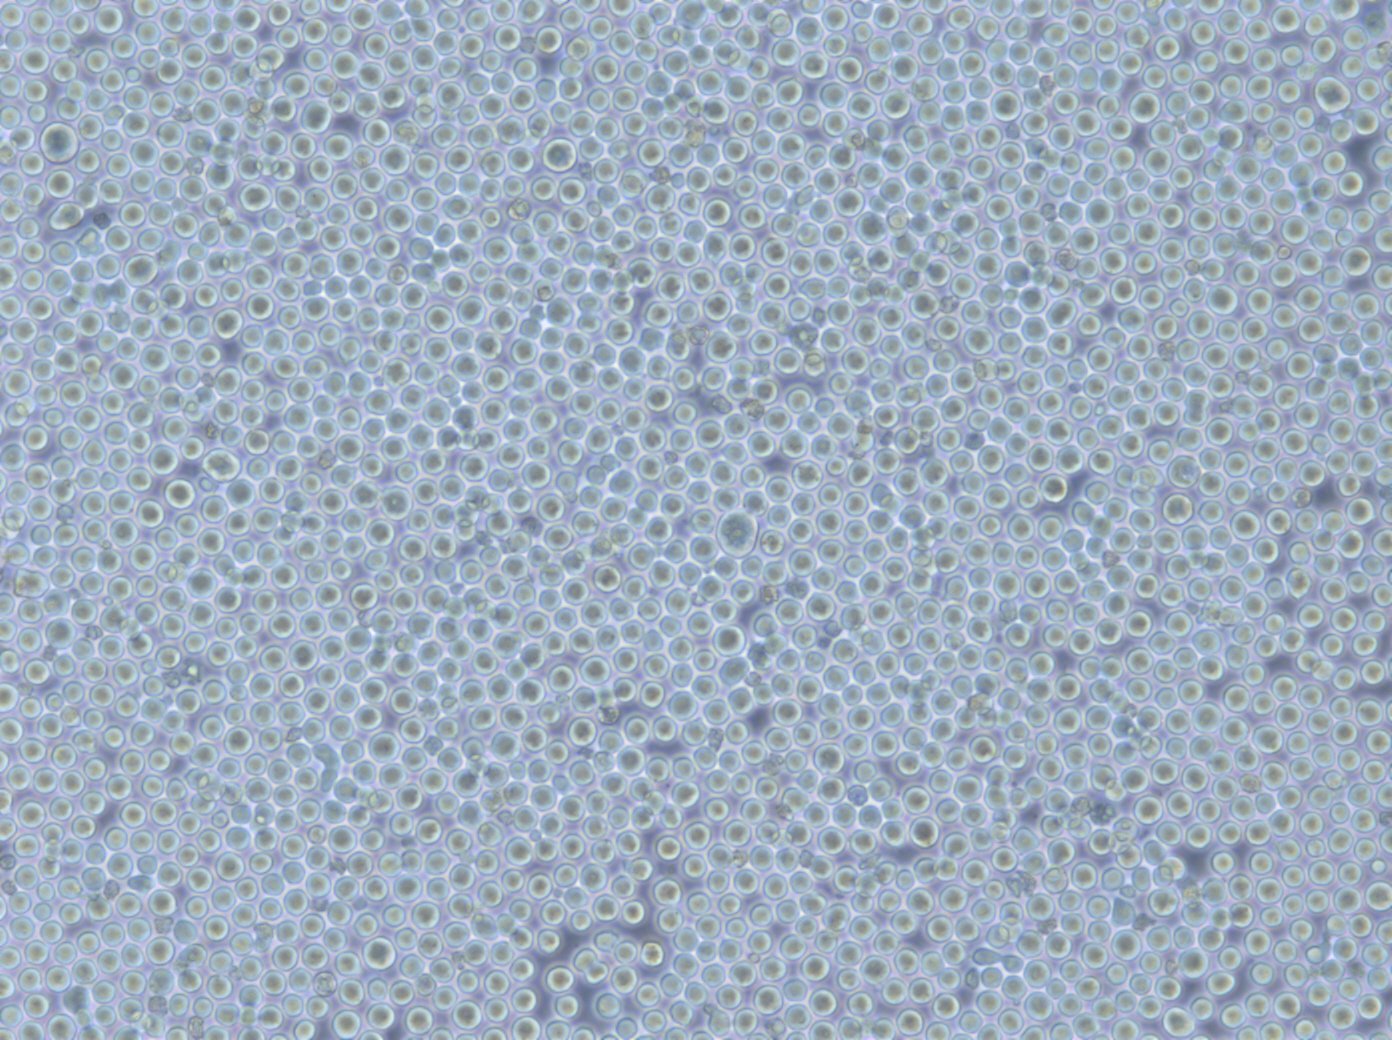 K562 Cells